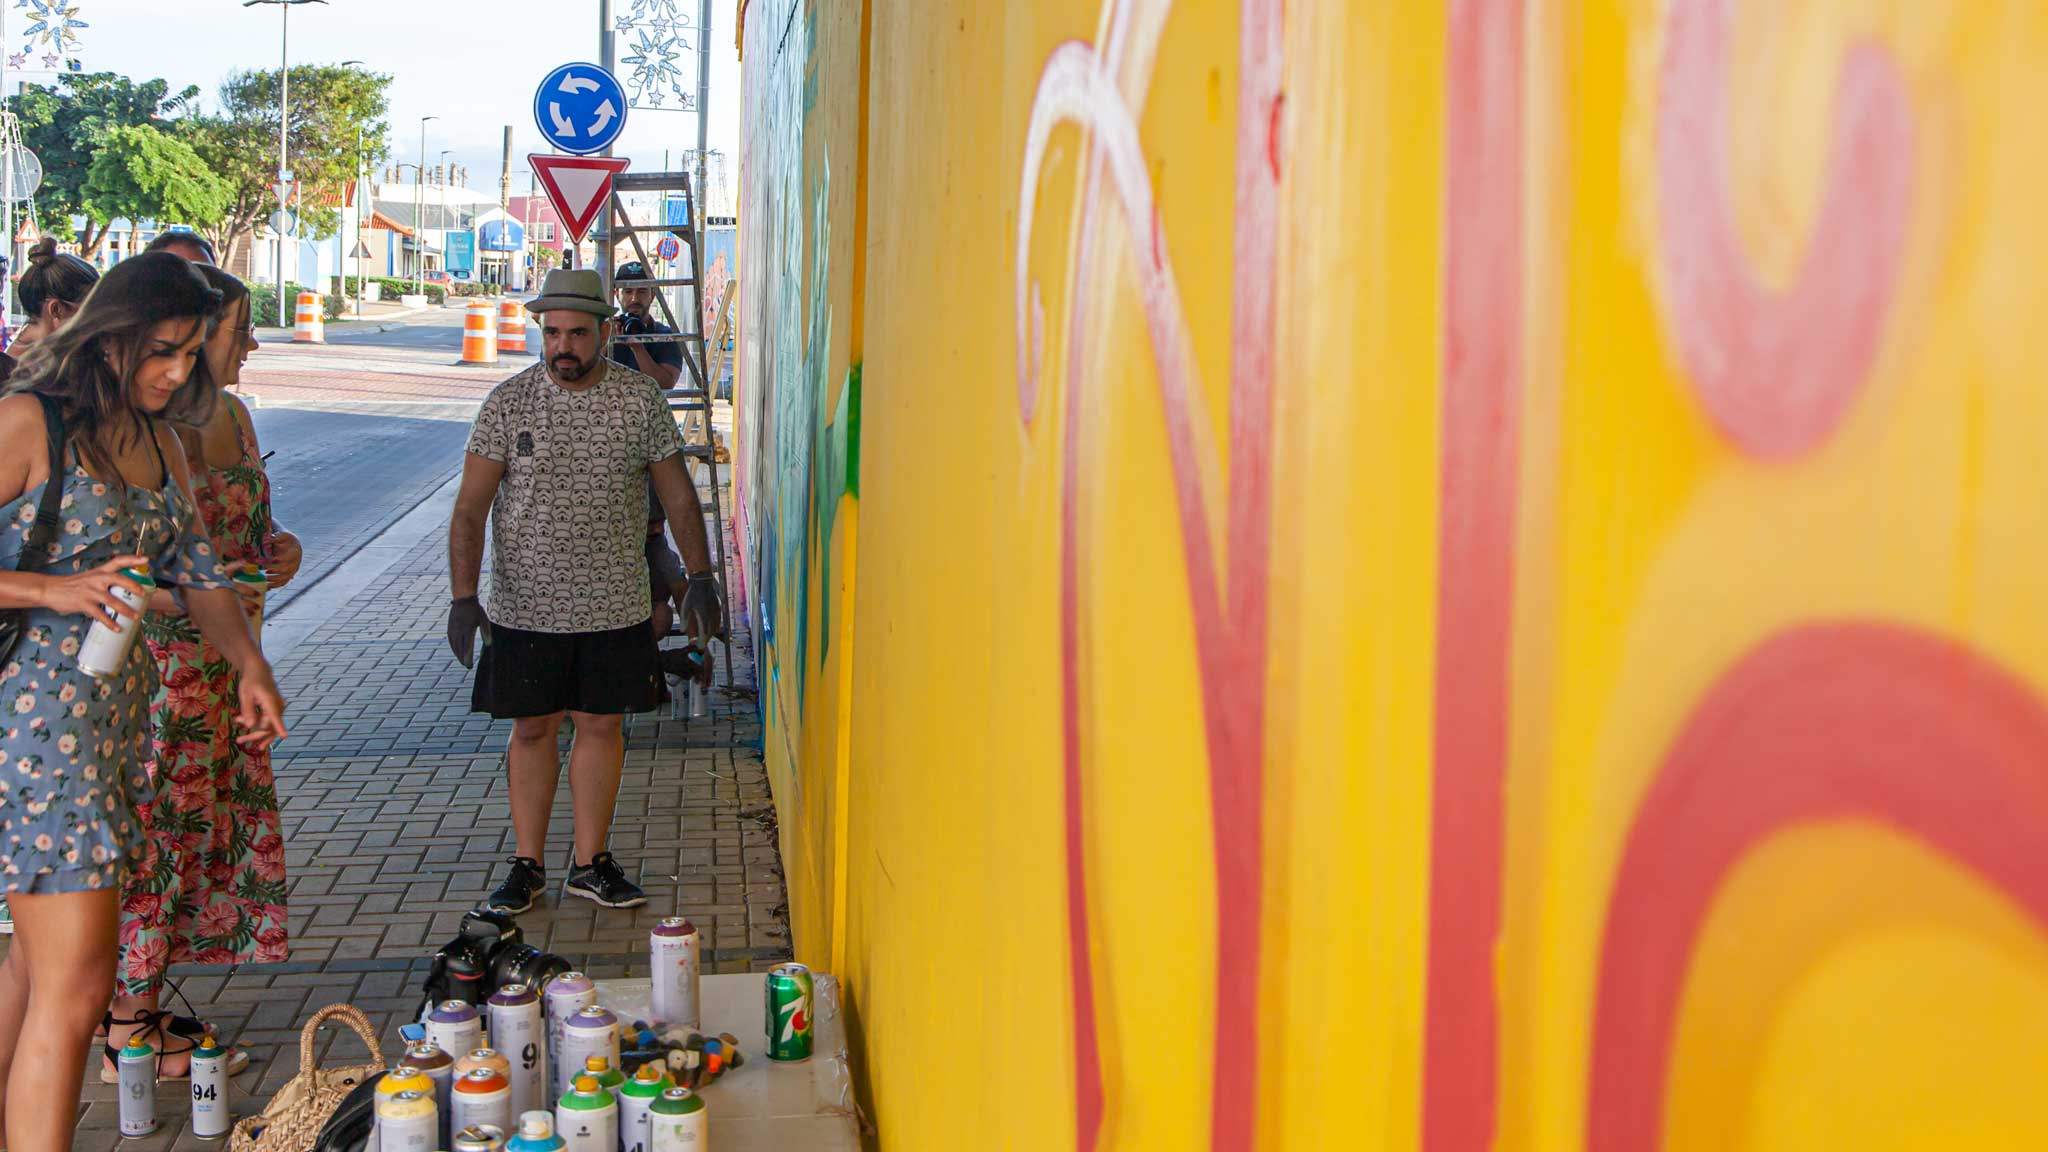 A street art workshop with spray paint in San Nicolas Aruba